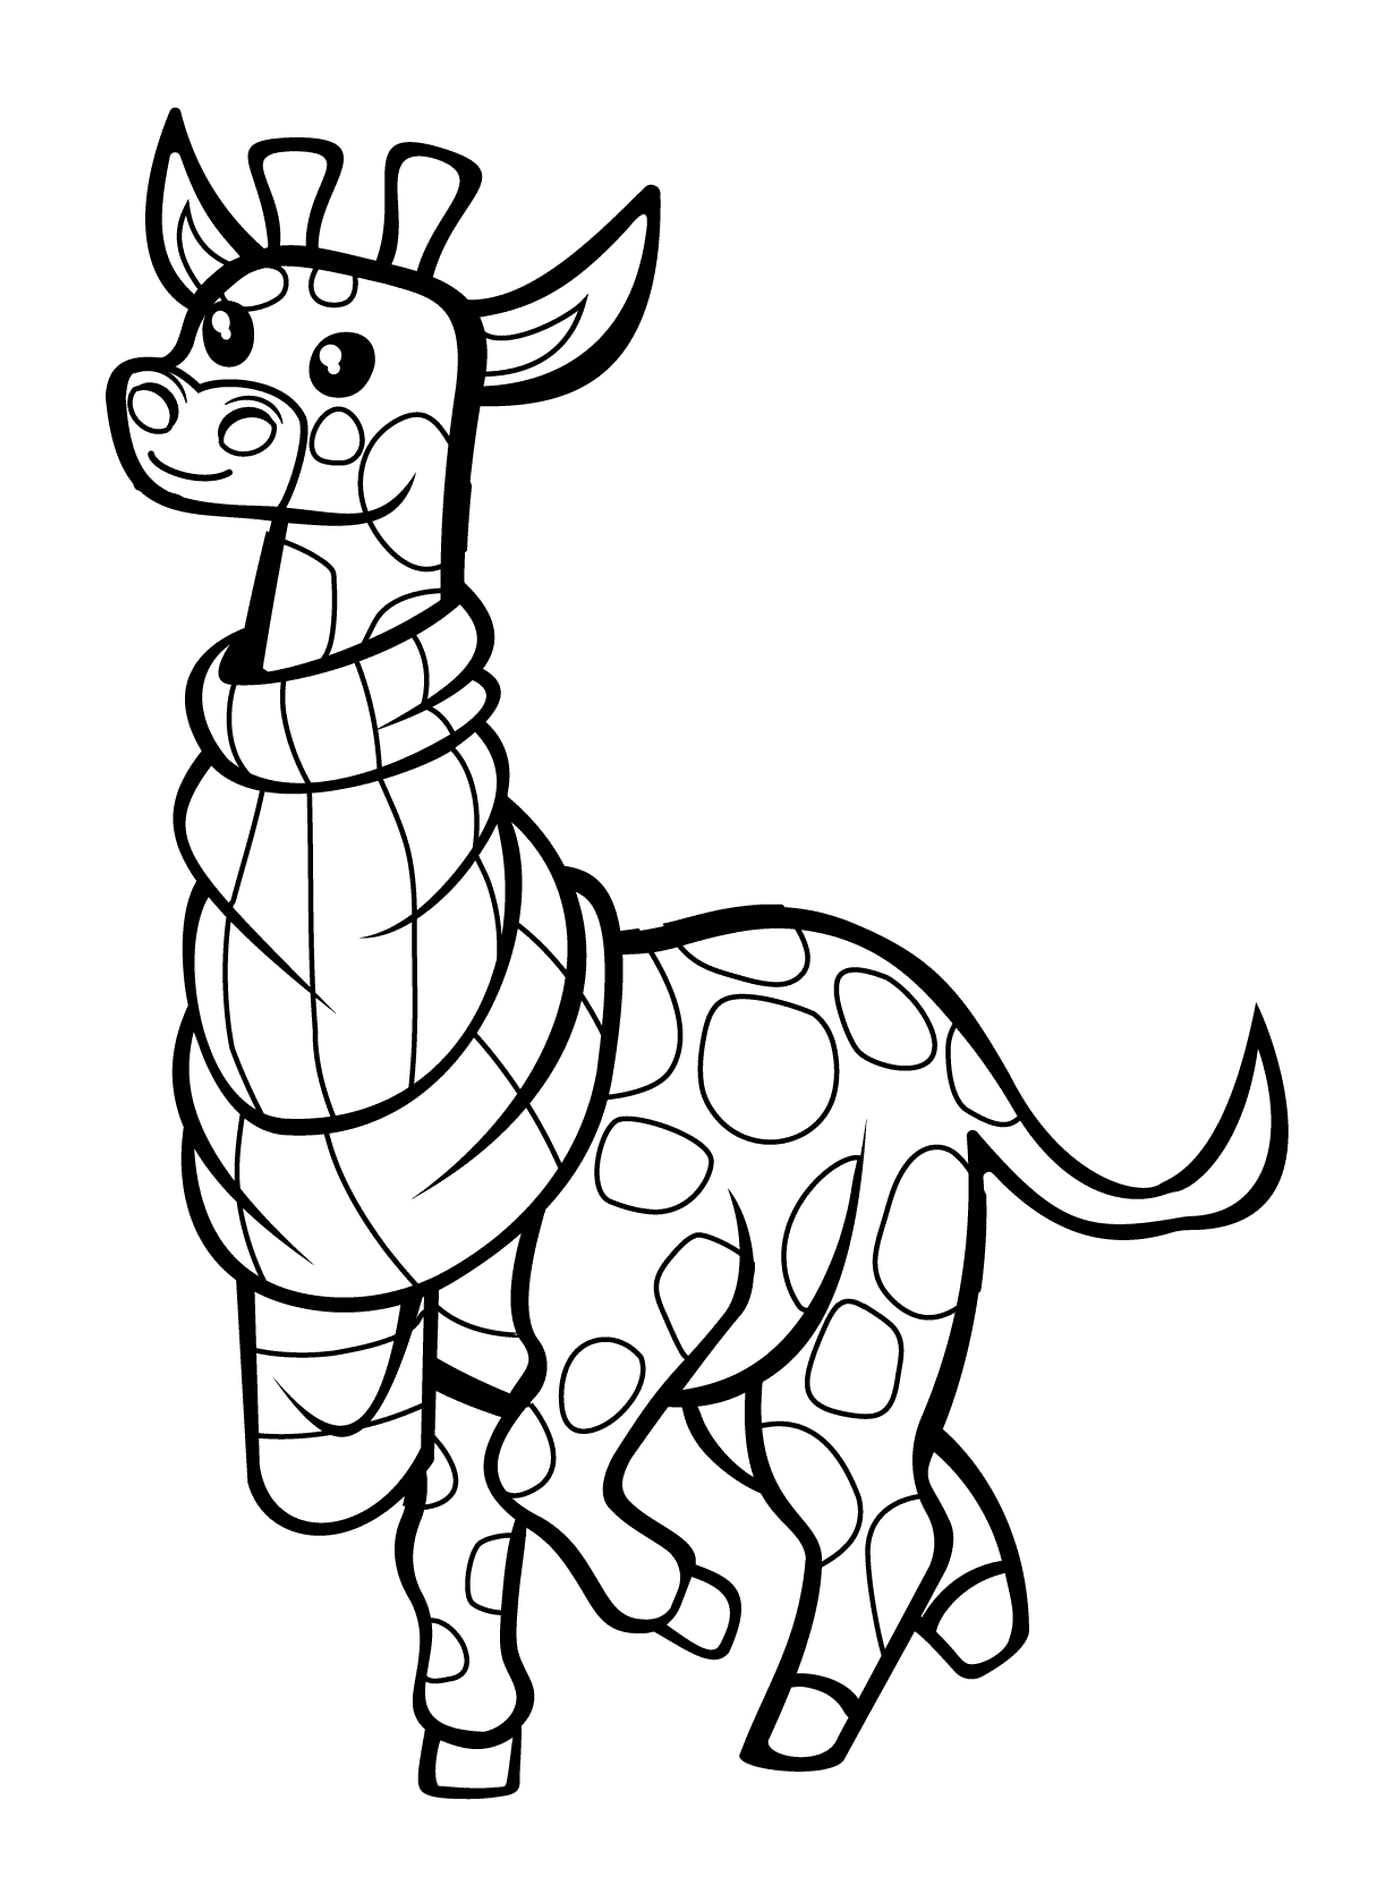   Une girafe portant une écharpe 